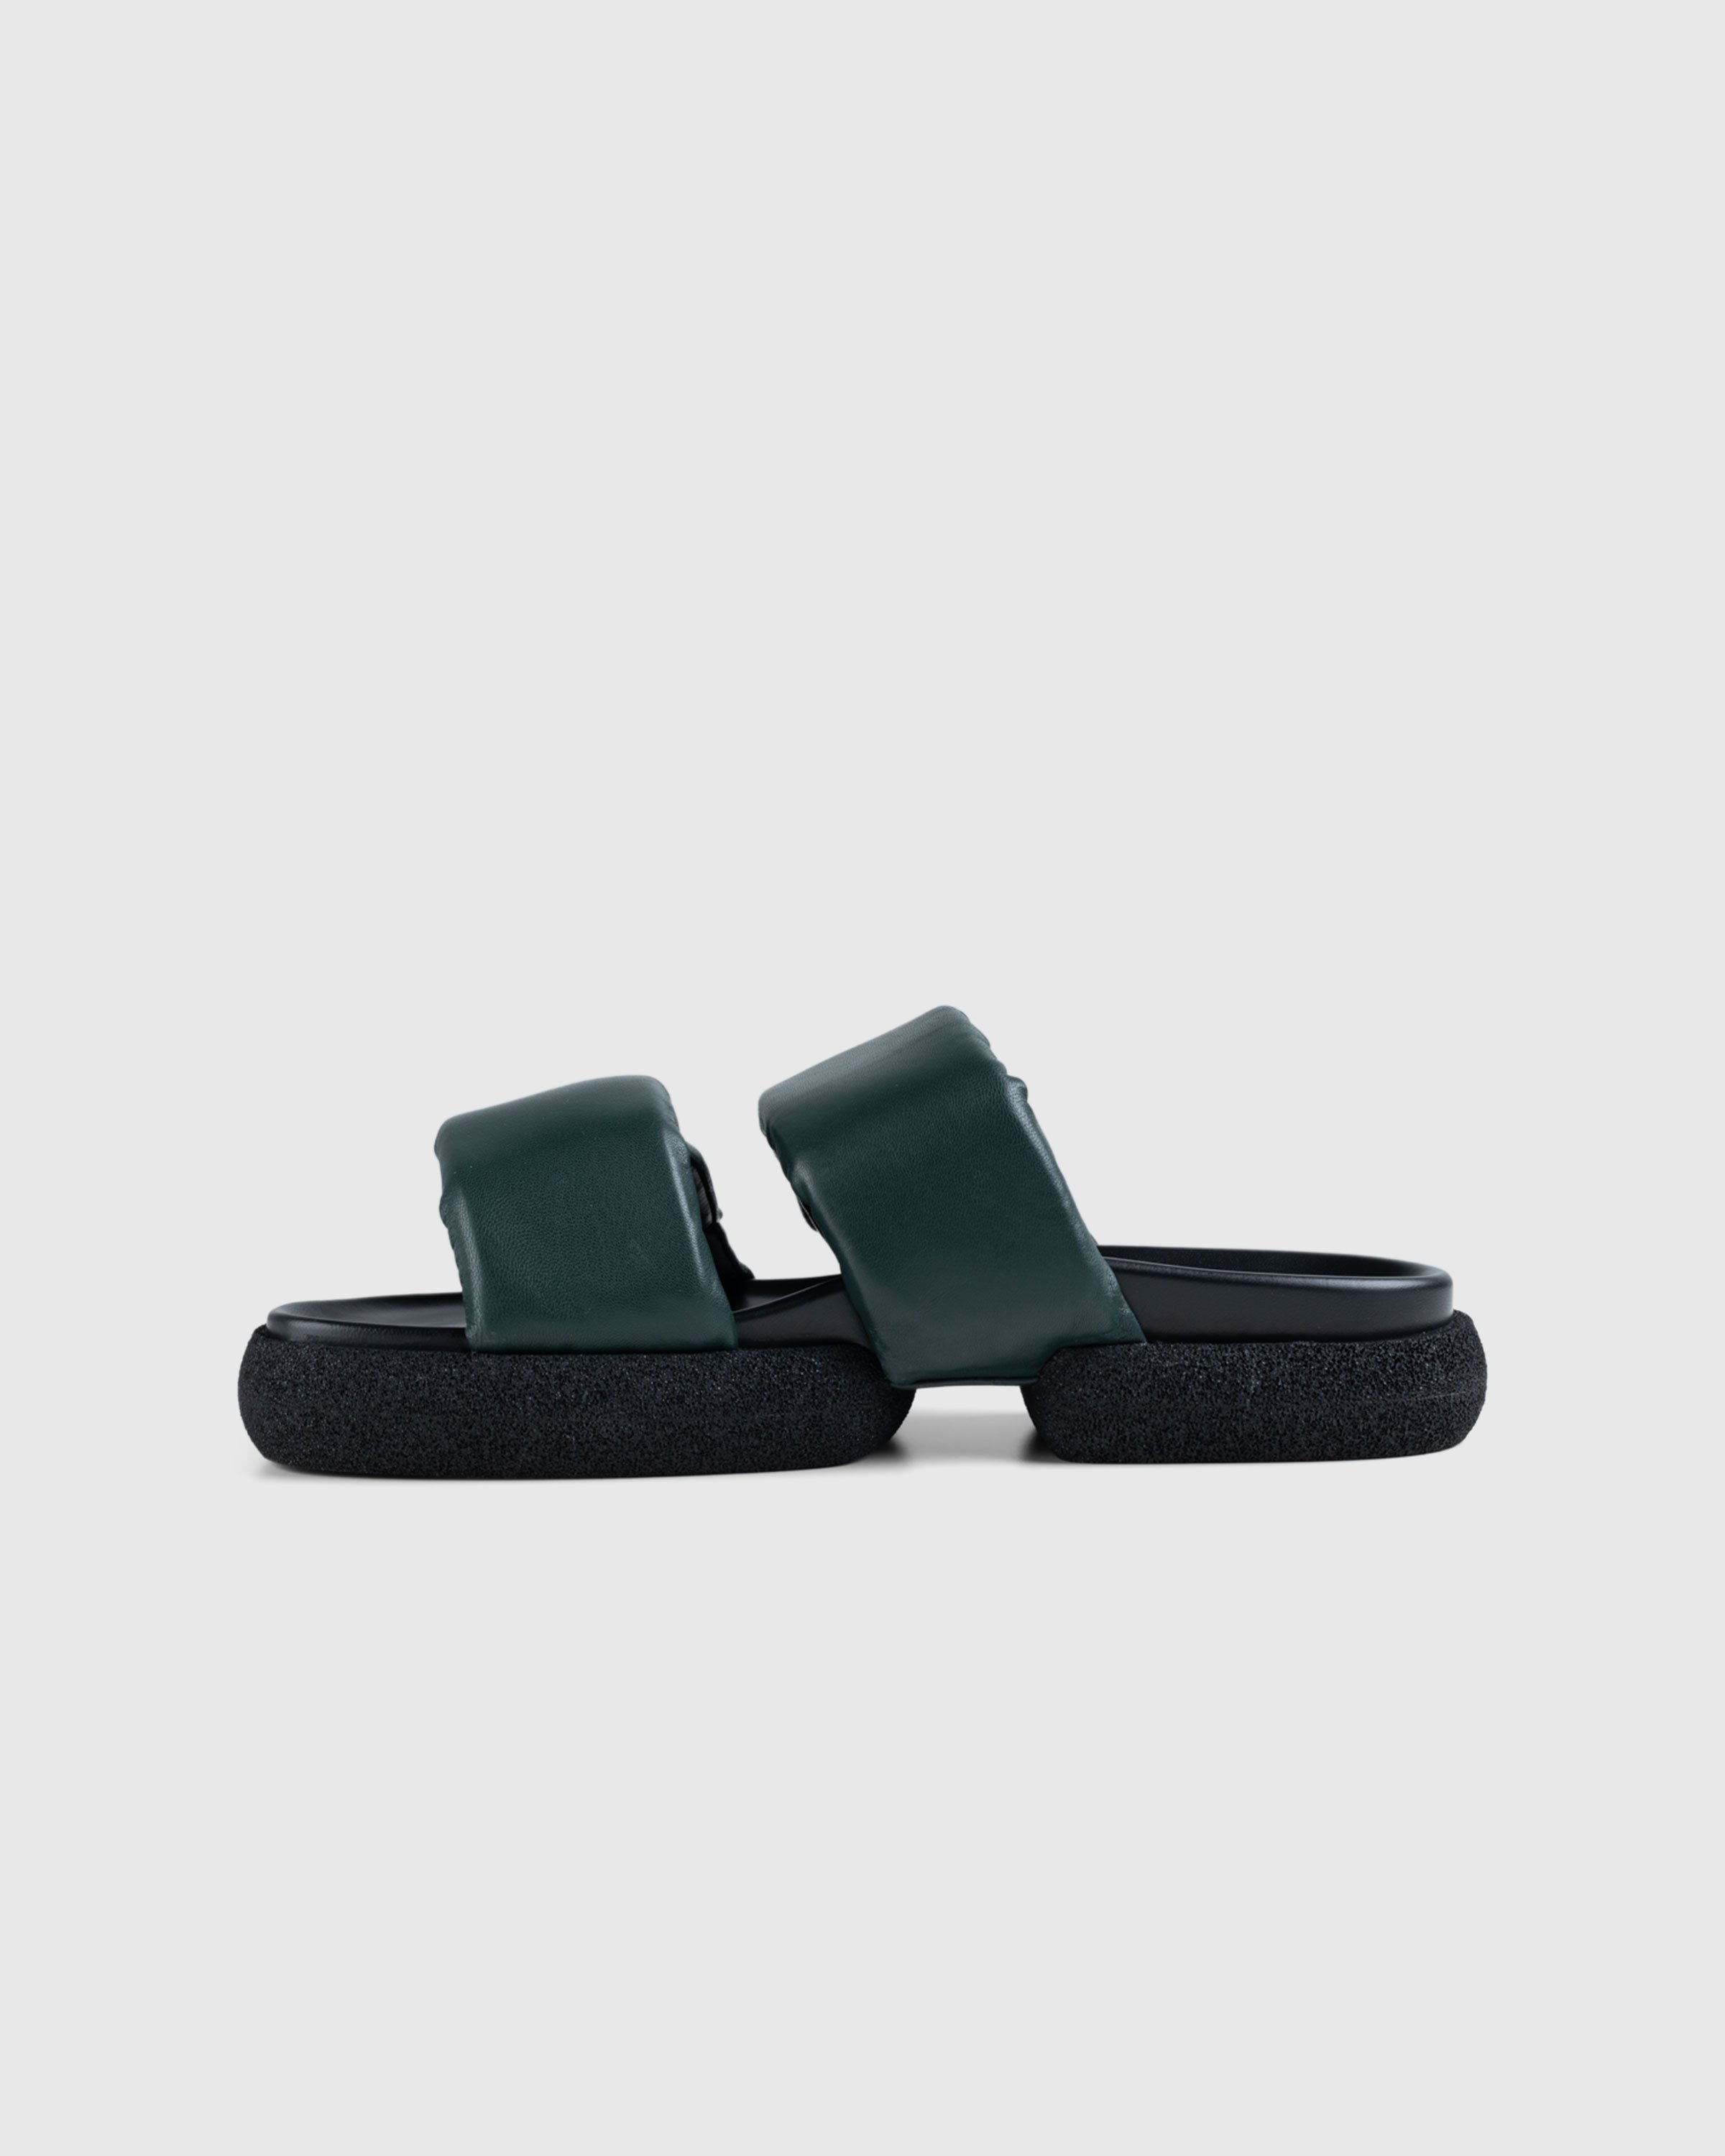 Dries van Noten - Leather Platform Sandals Green - Footwear - Green - Image 2